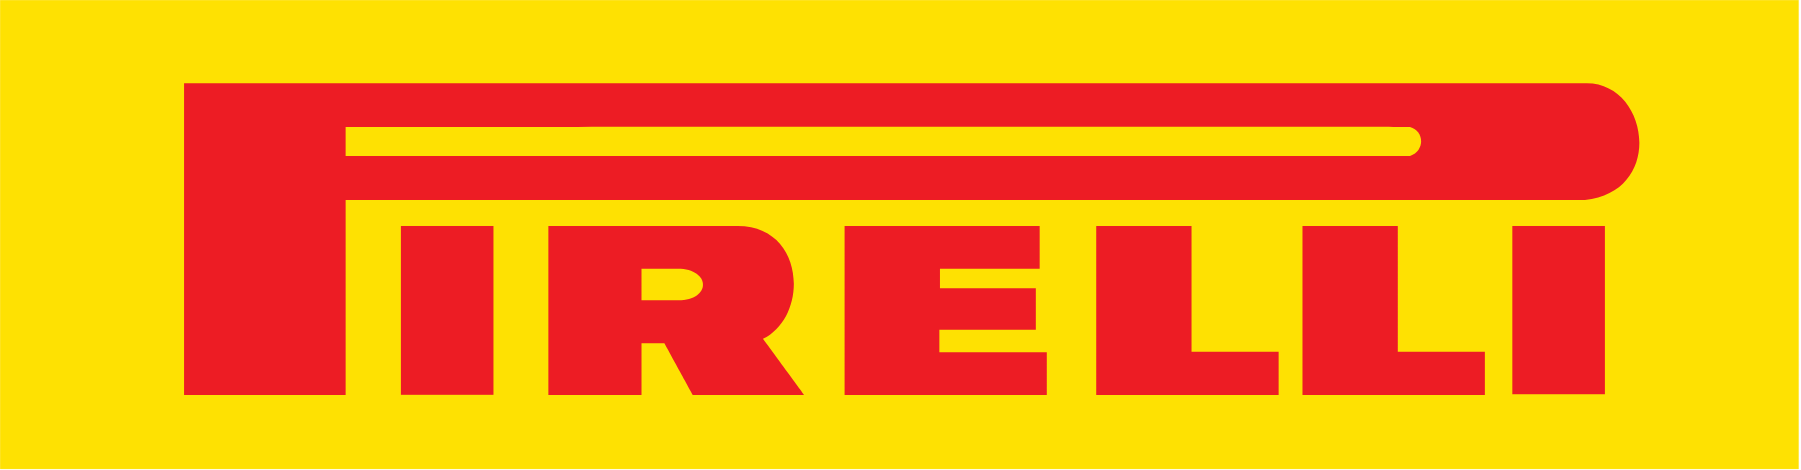 Pirelli
 logo (PNG transparent)